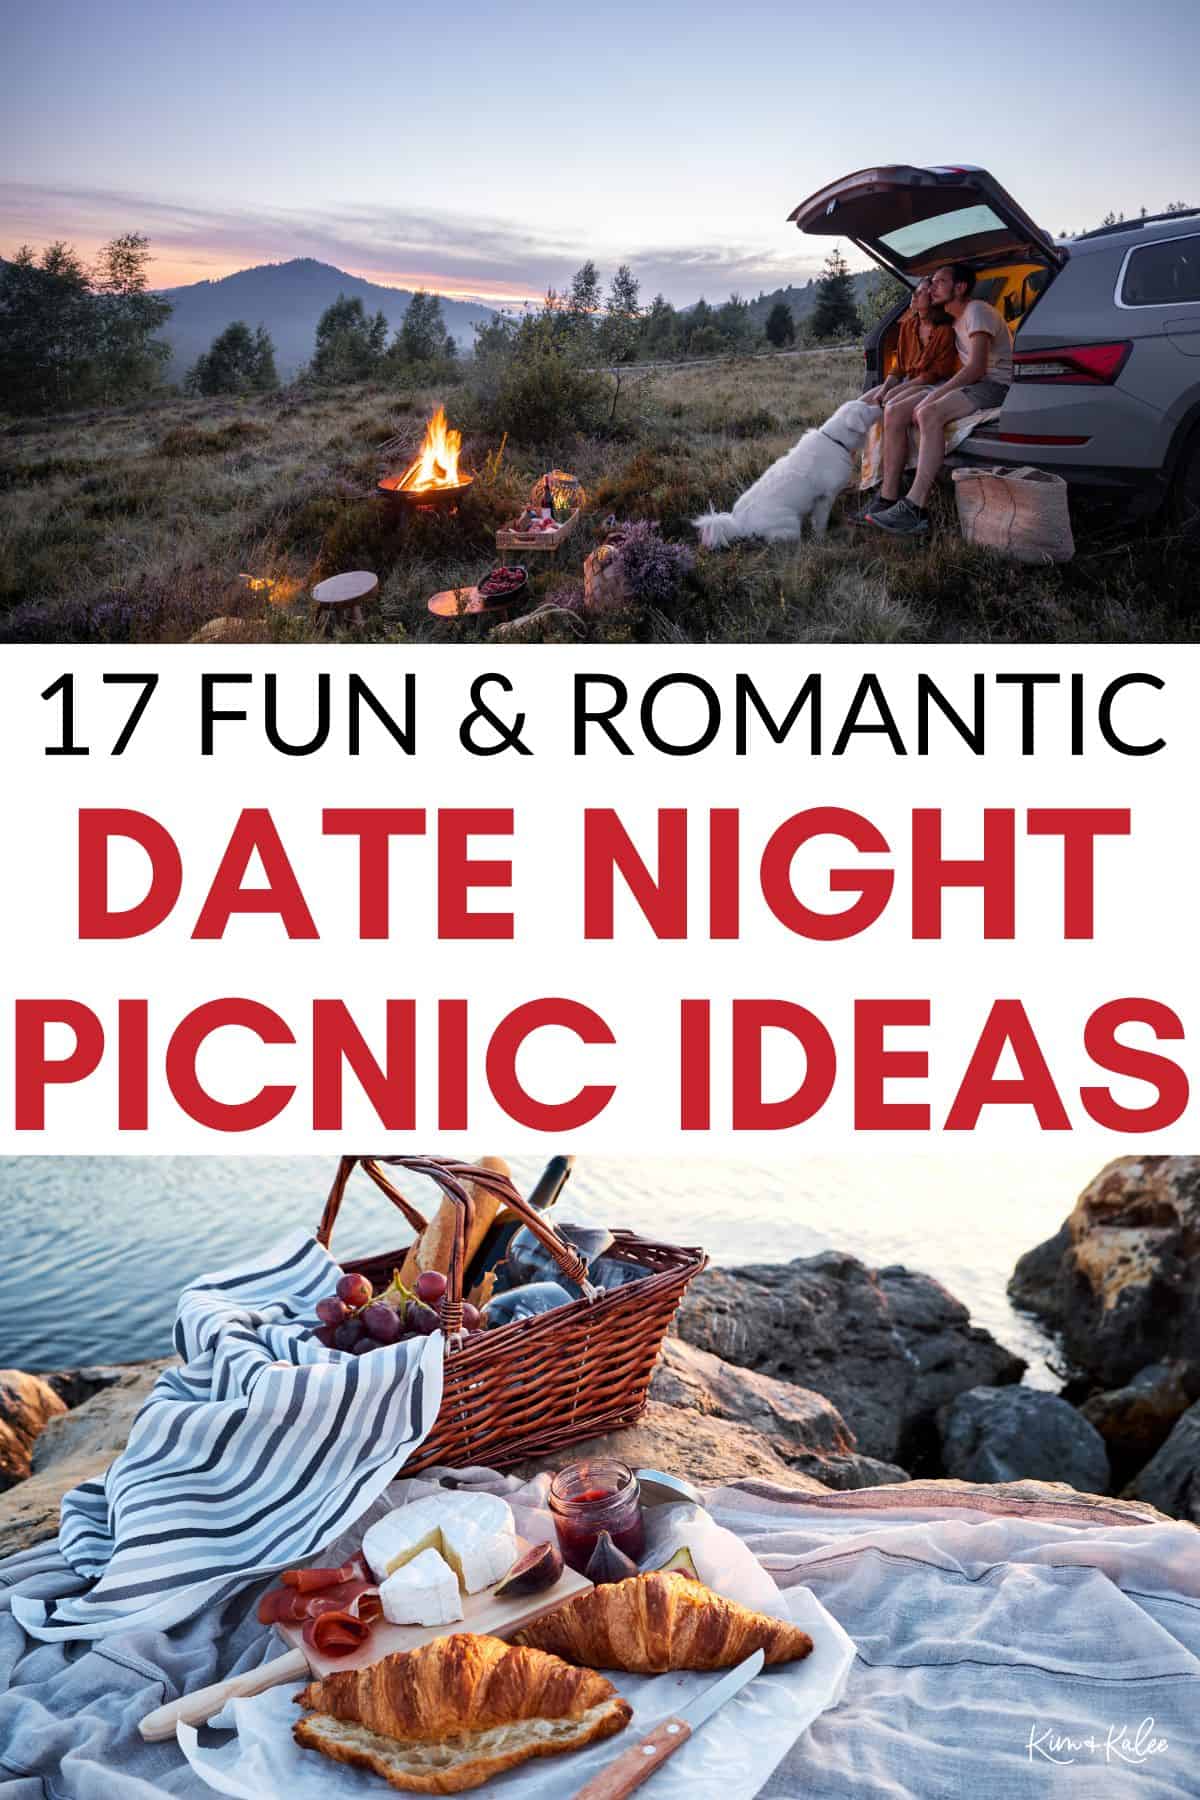 17 Romantic Picnic Ideas at Night (Food & Activities)